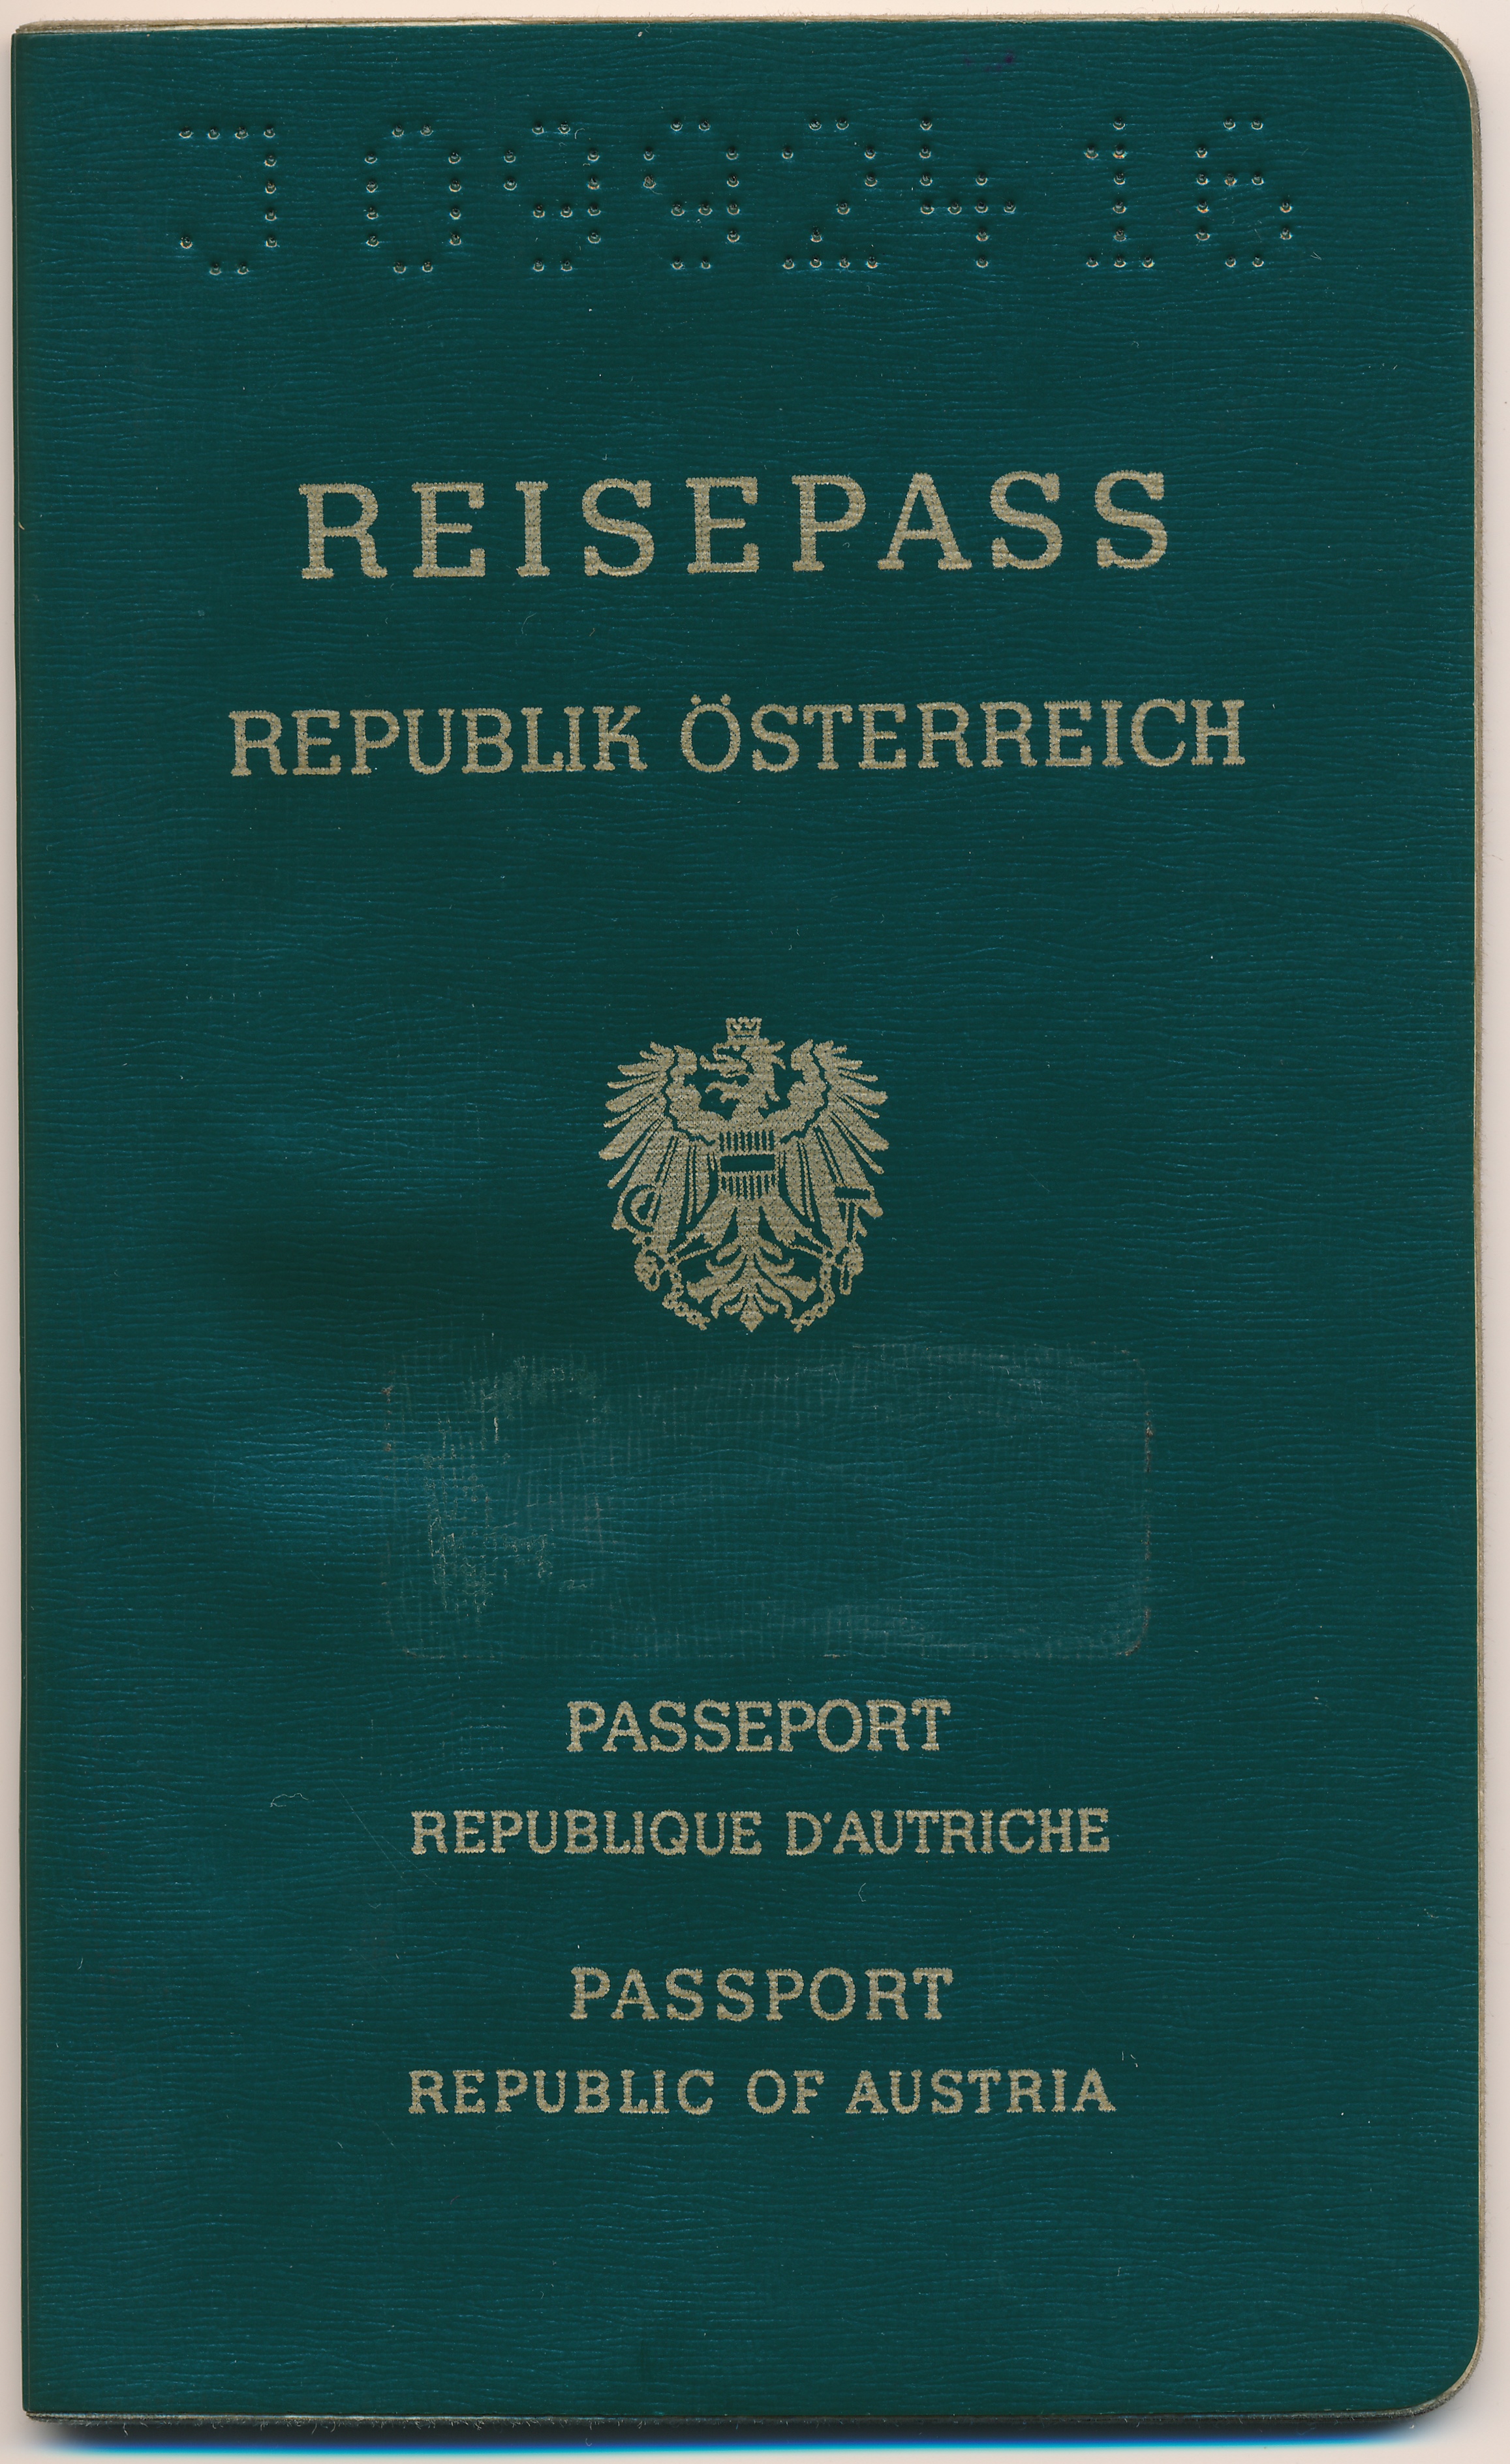 File Old Passeport Austria Reisepass Republick Osterreich 1980 Jpg Wikimedia Commons